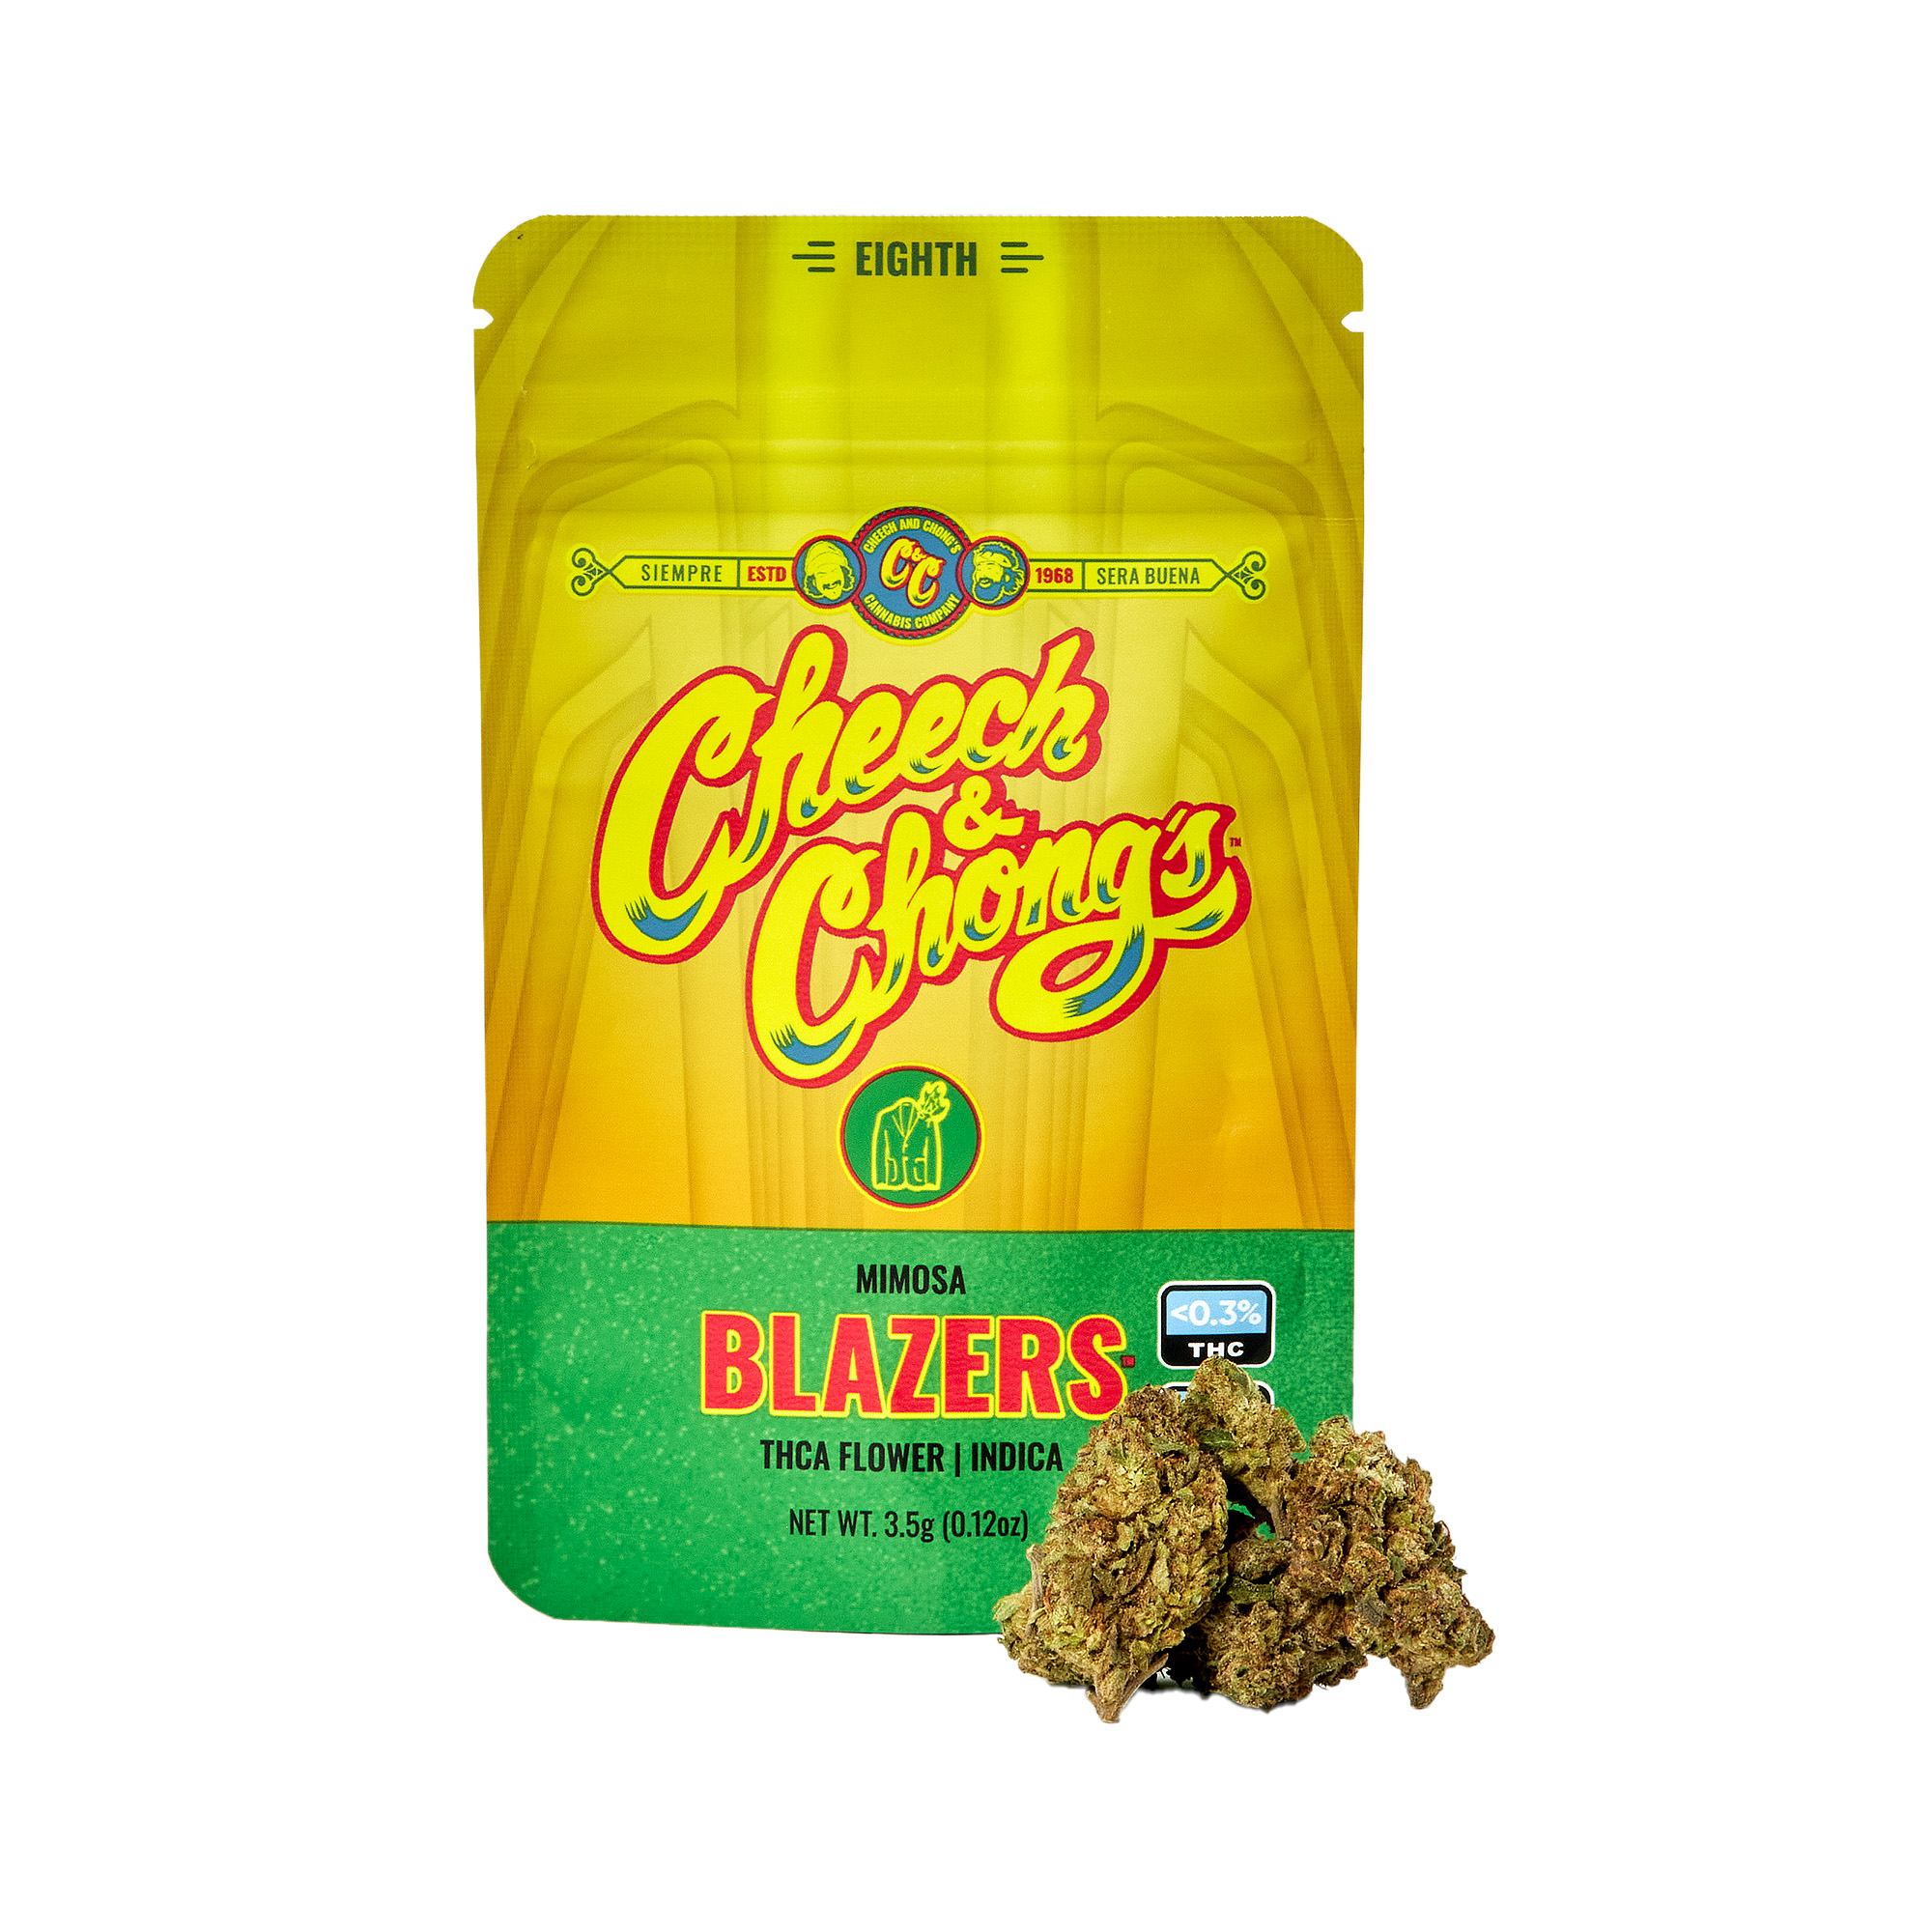 Cheech and Chongs Blazers - Mimosa -Eighth - Cheech And Chong's 